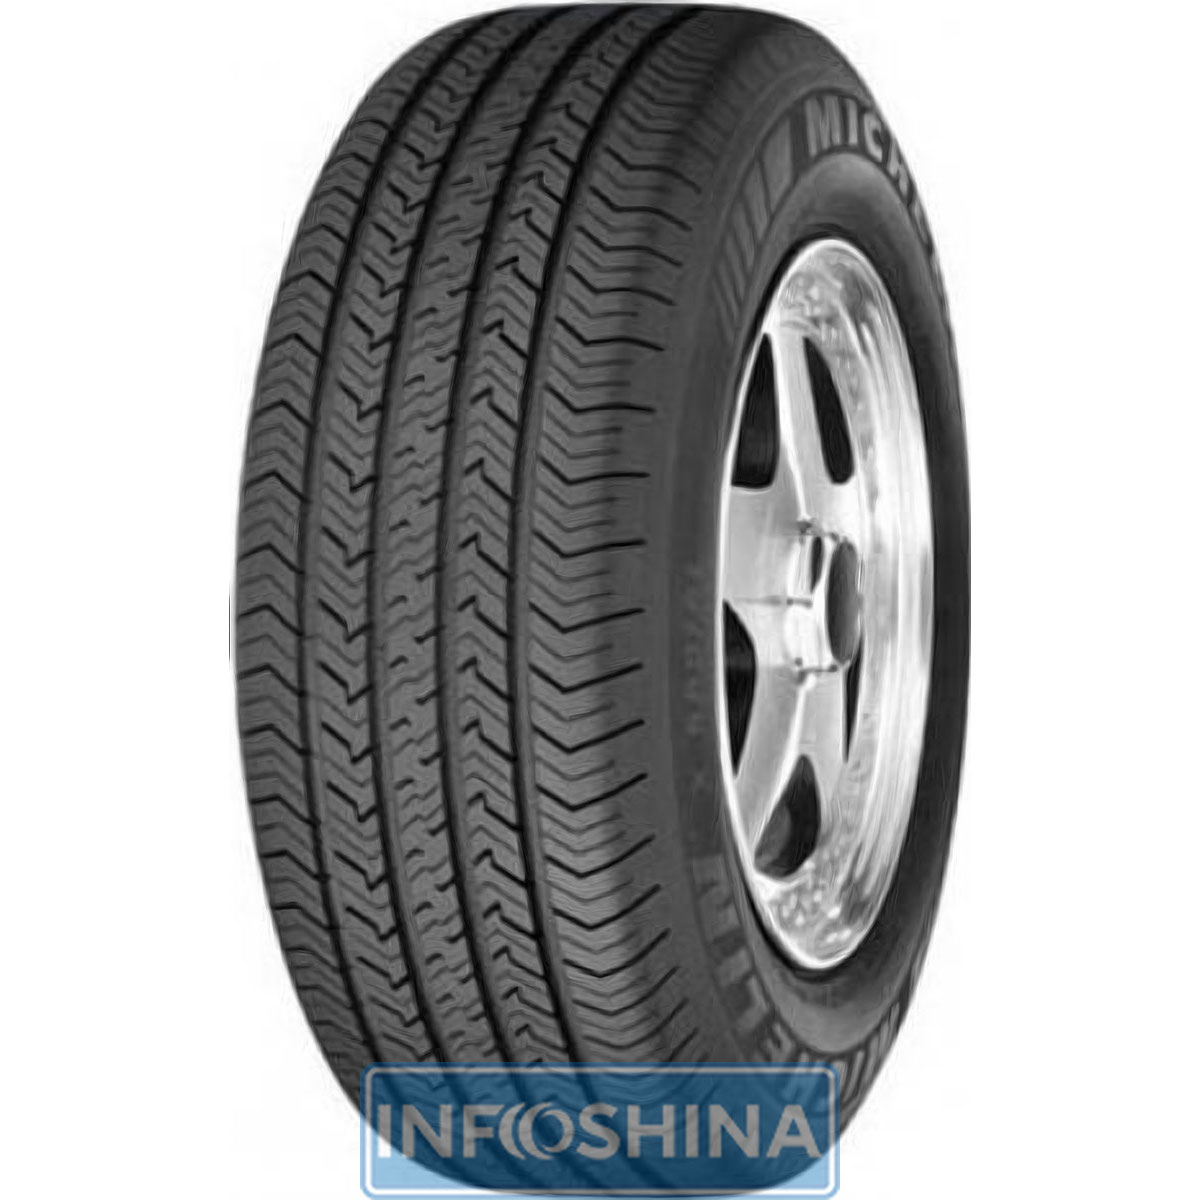 Купить шины Michelin X-Radial DT 185/65 R14 86S